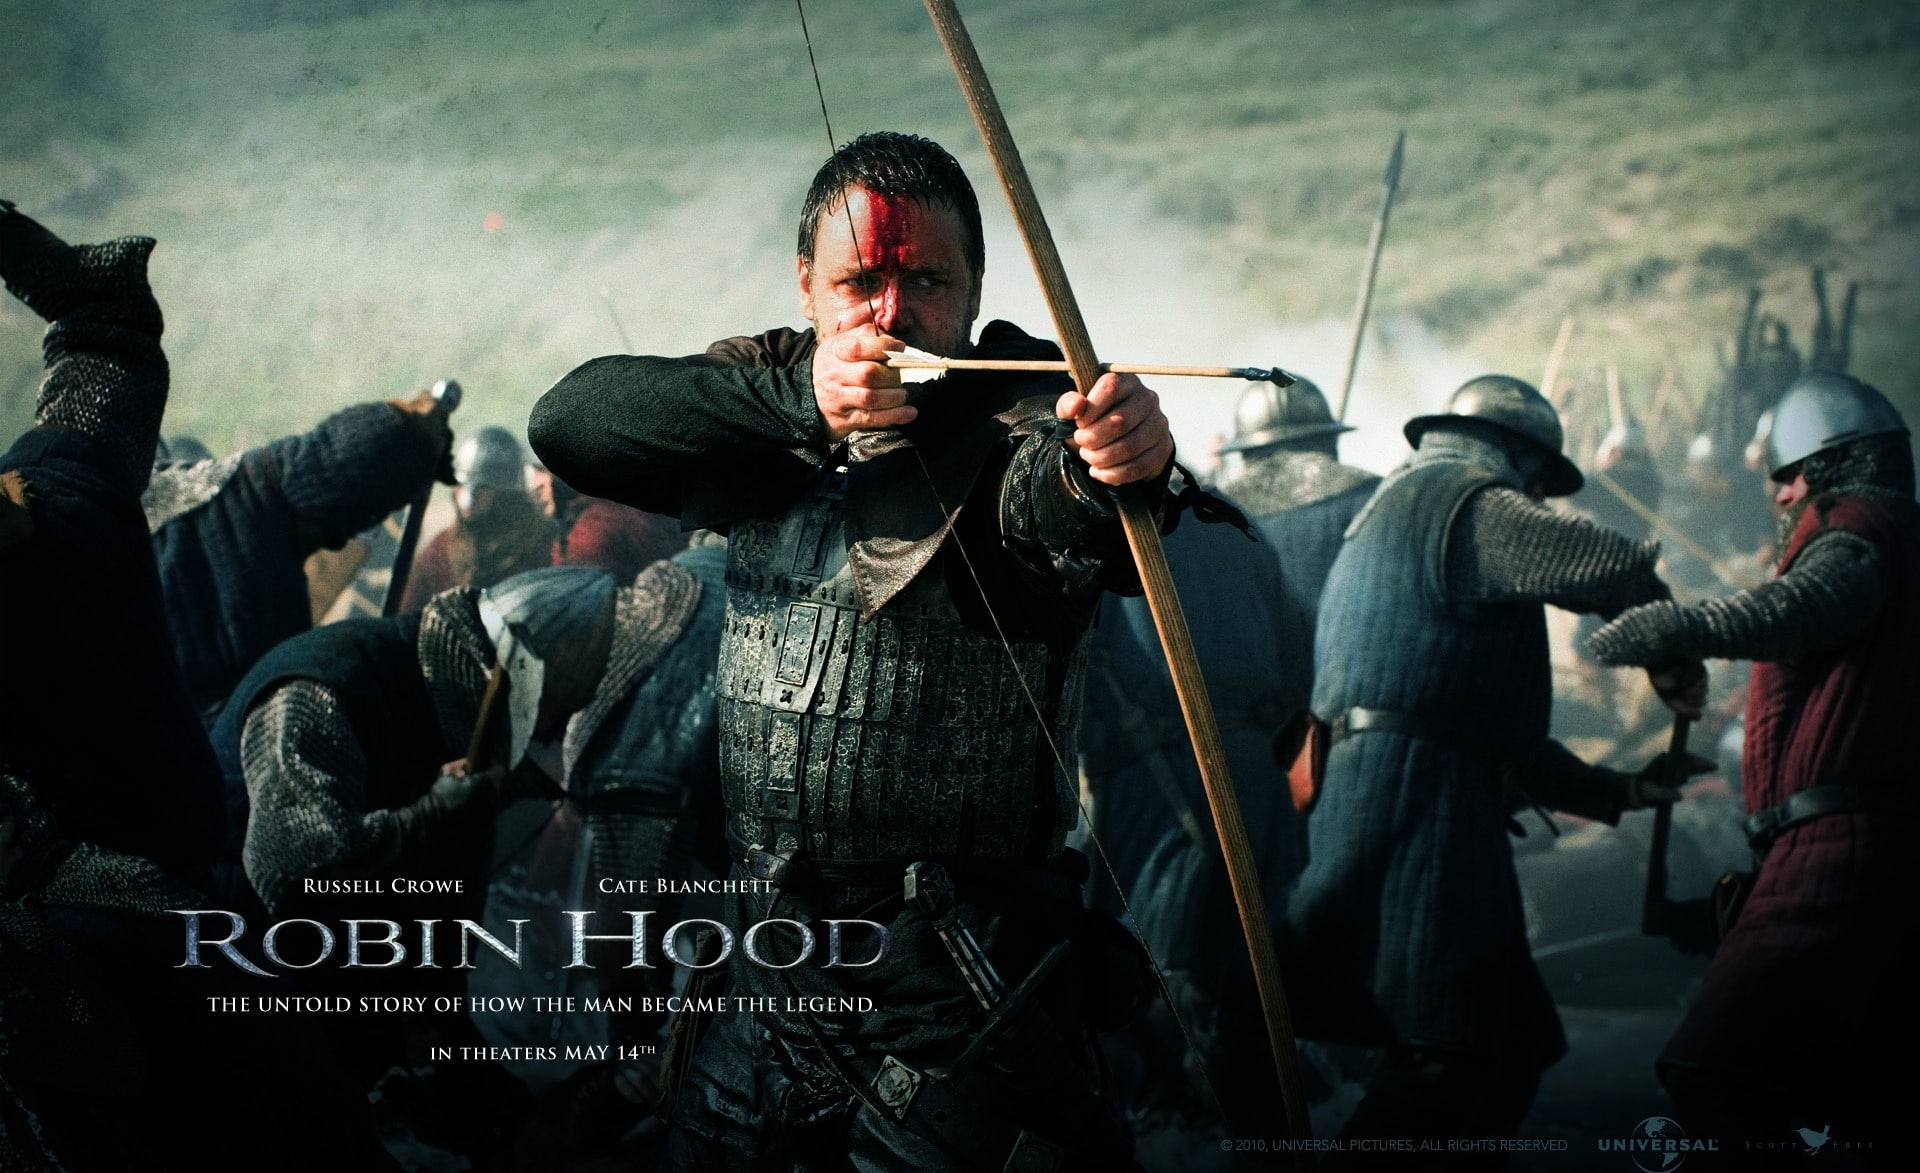 Russell Crowe, Robin Hood, Robin Hood movie poster, Movies, russell crowe as robin hood